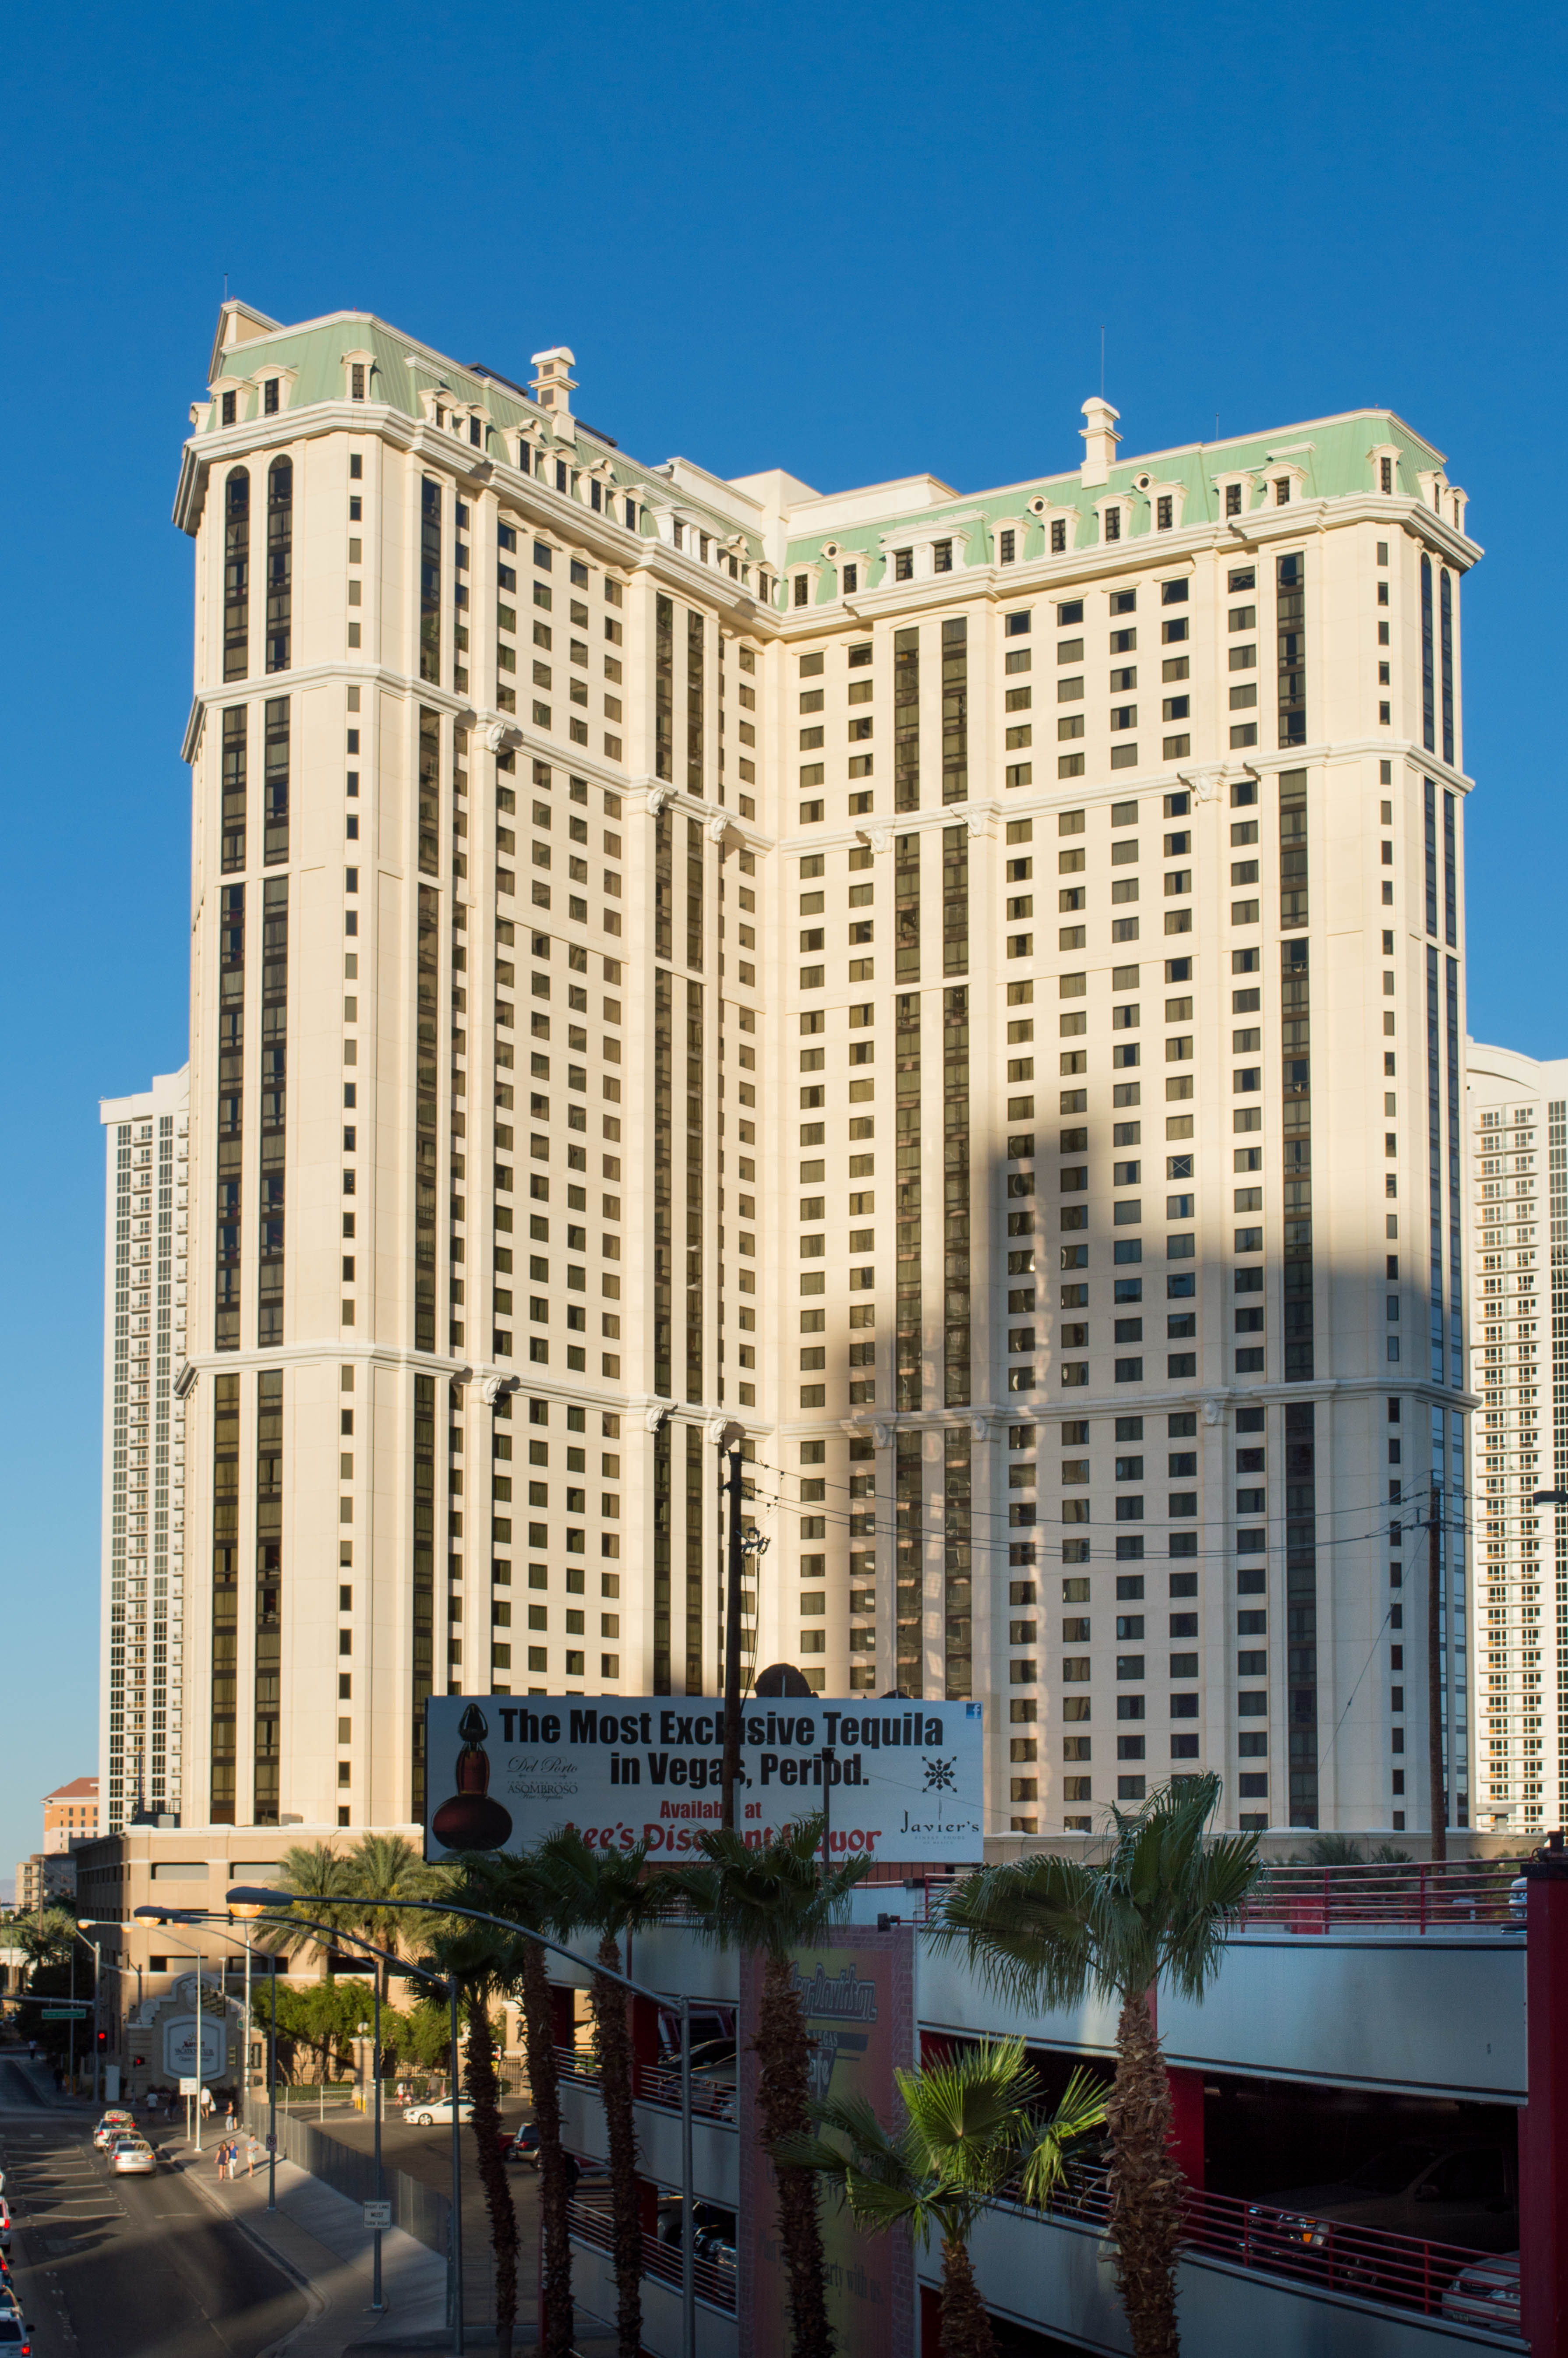 Marriott Grand Chateau - Luxury timeshare in Las VegasParadise Timeshare  Resale